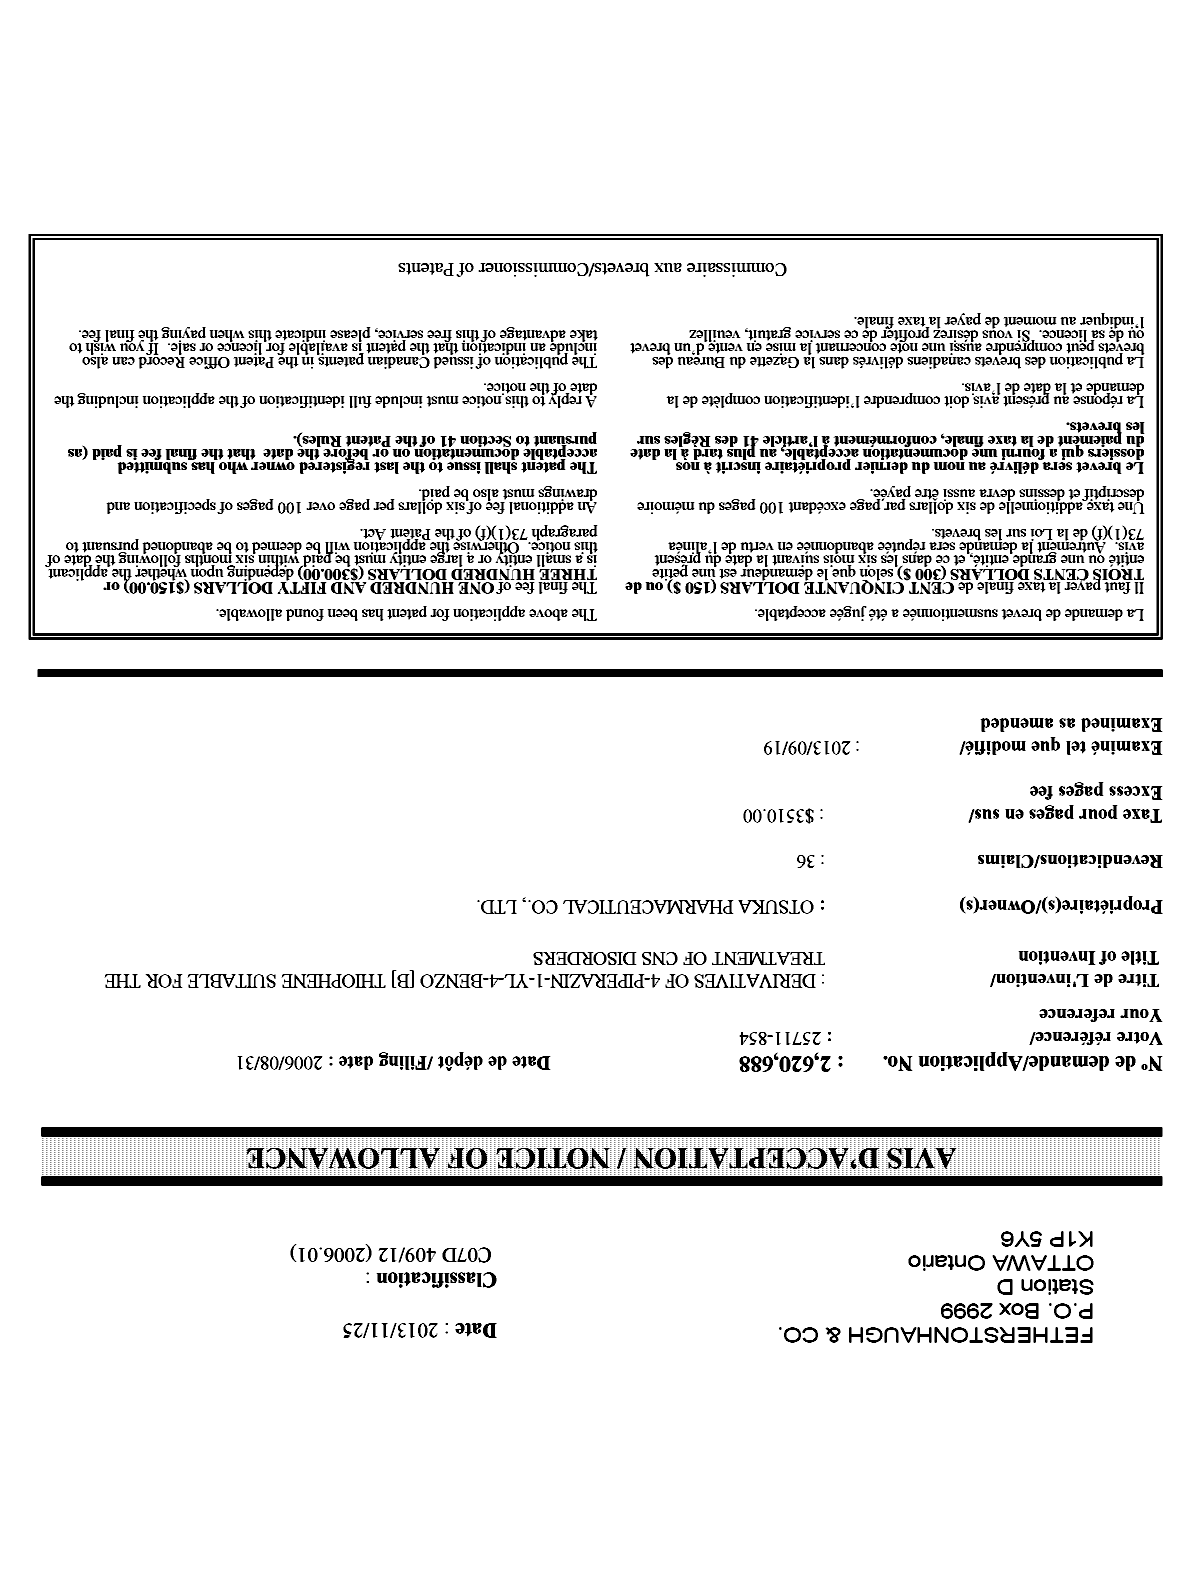 Canadian Patent Document 2620688. Correspondence 20121225. Image 1 of 1